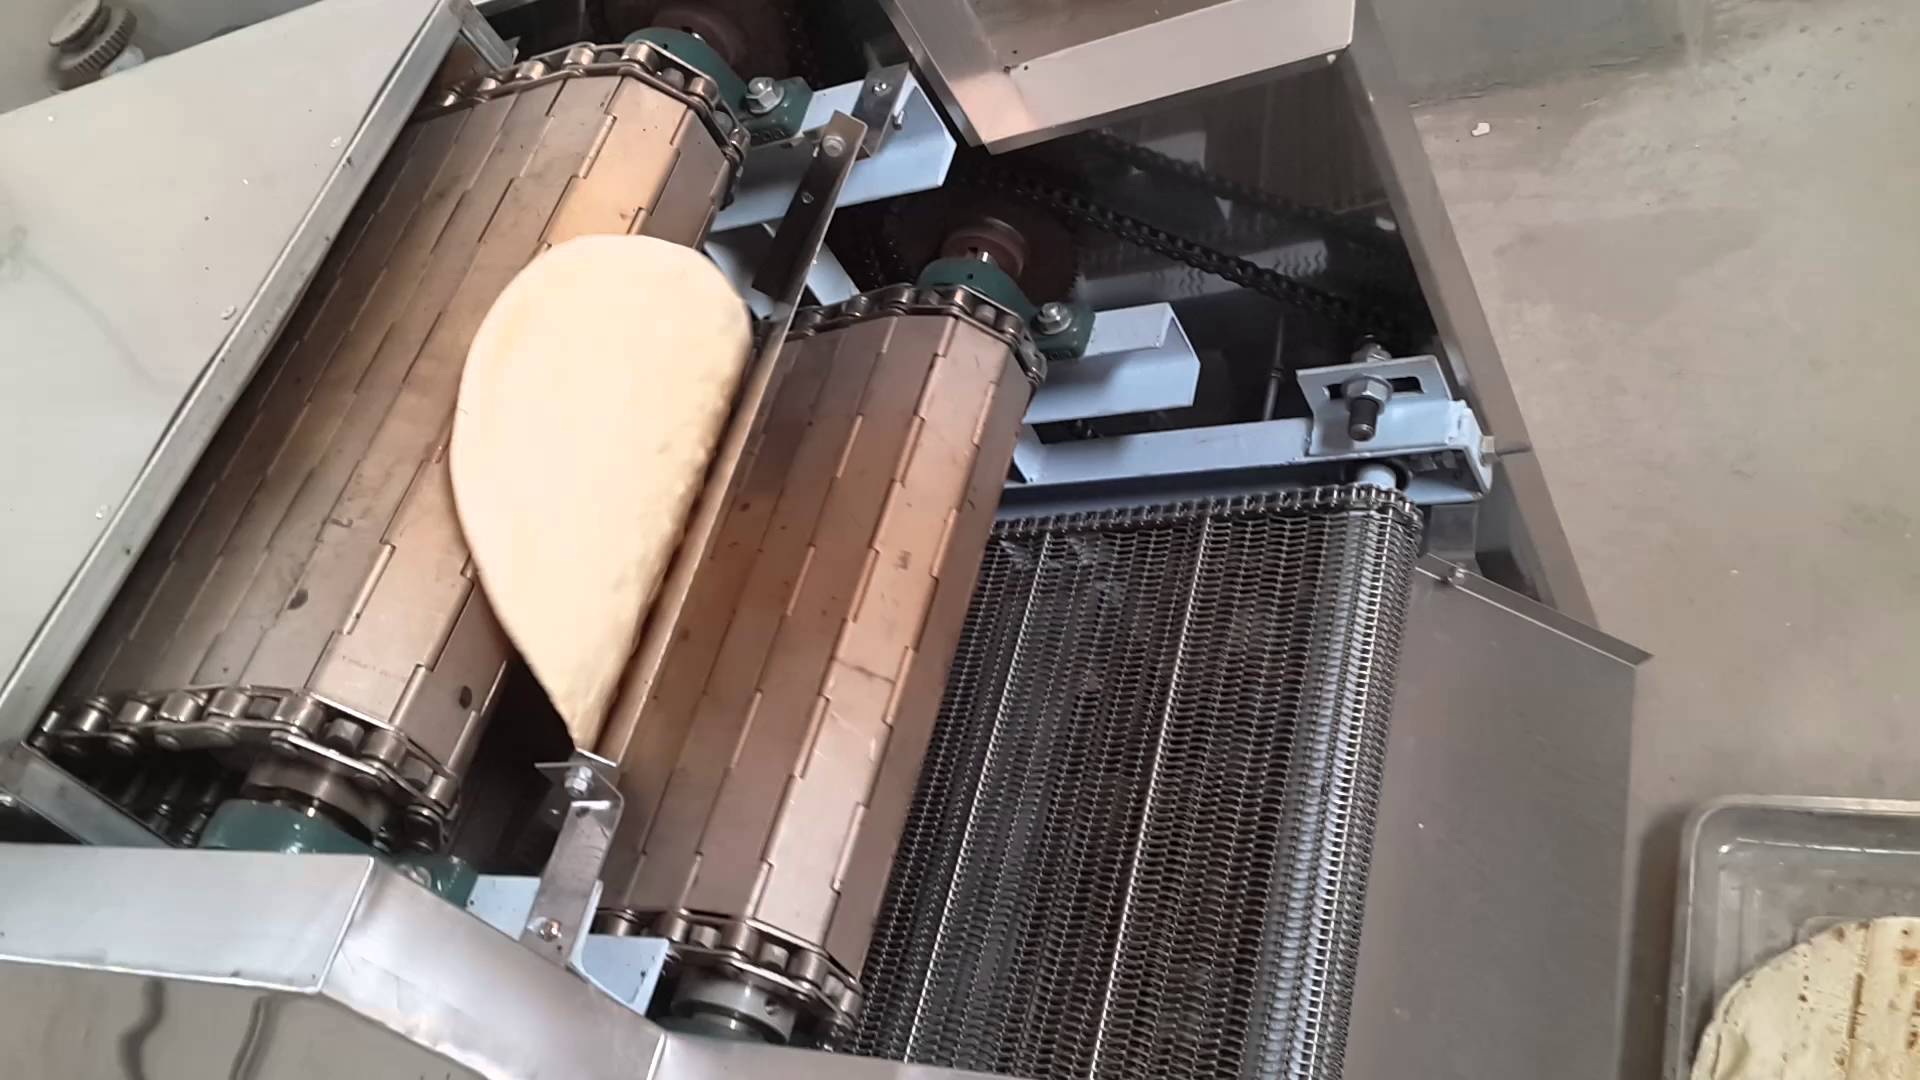 Roti bread making machine